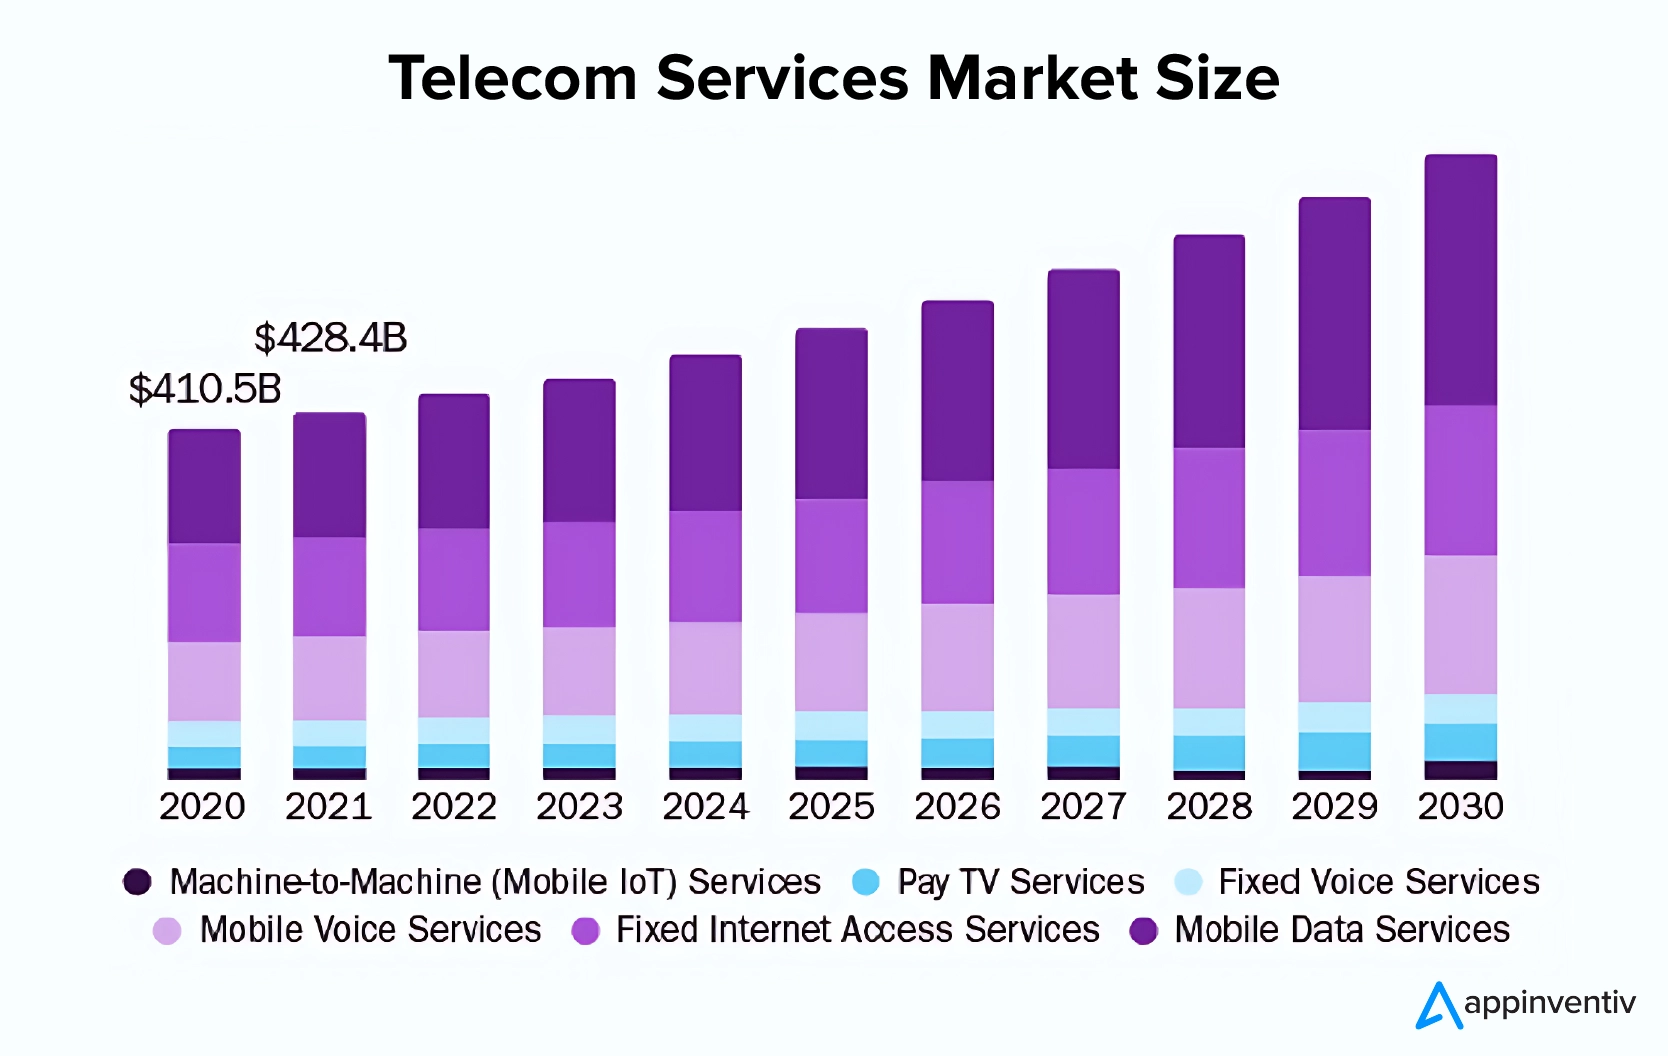 Telecom services market value